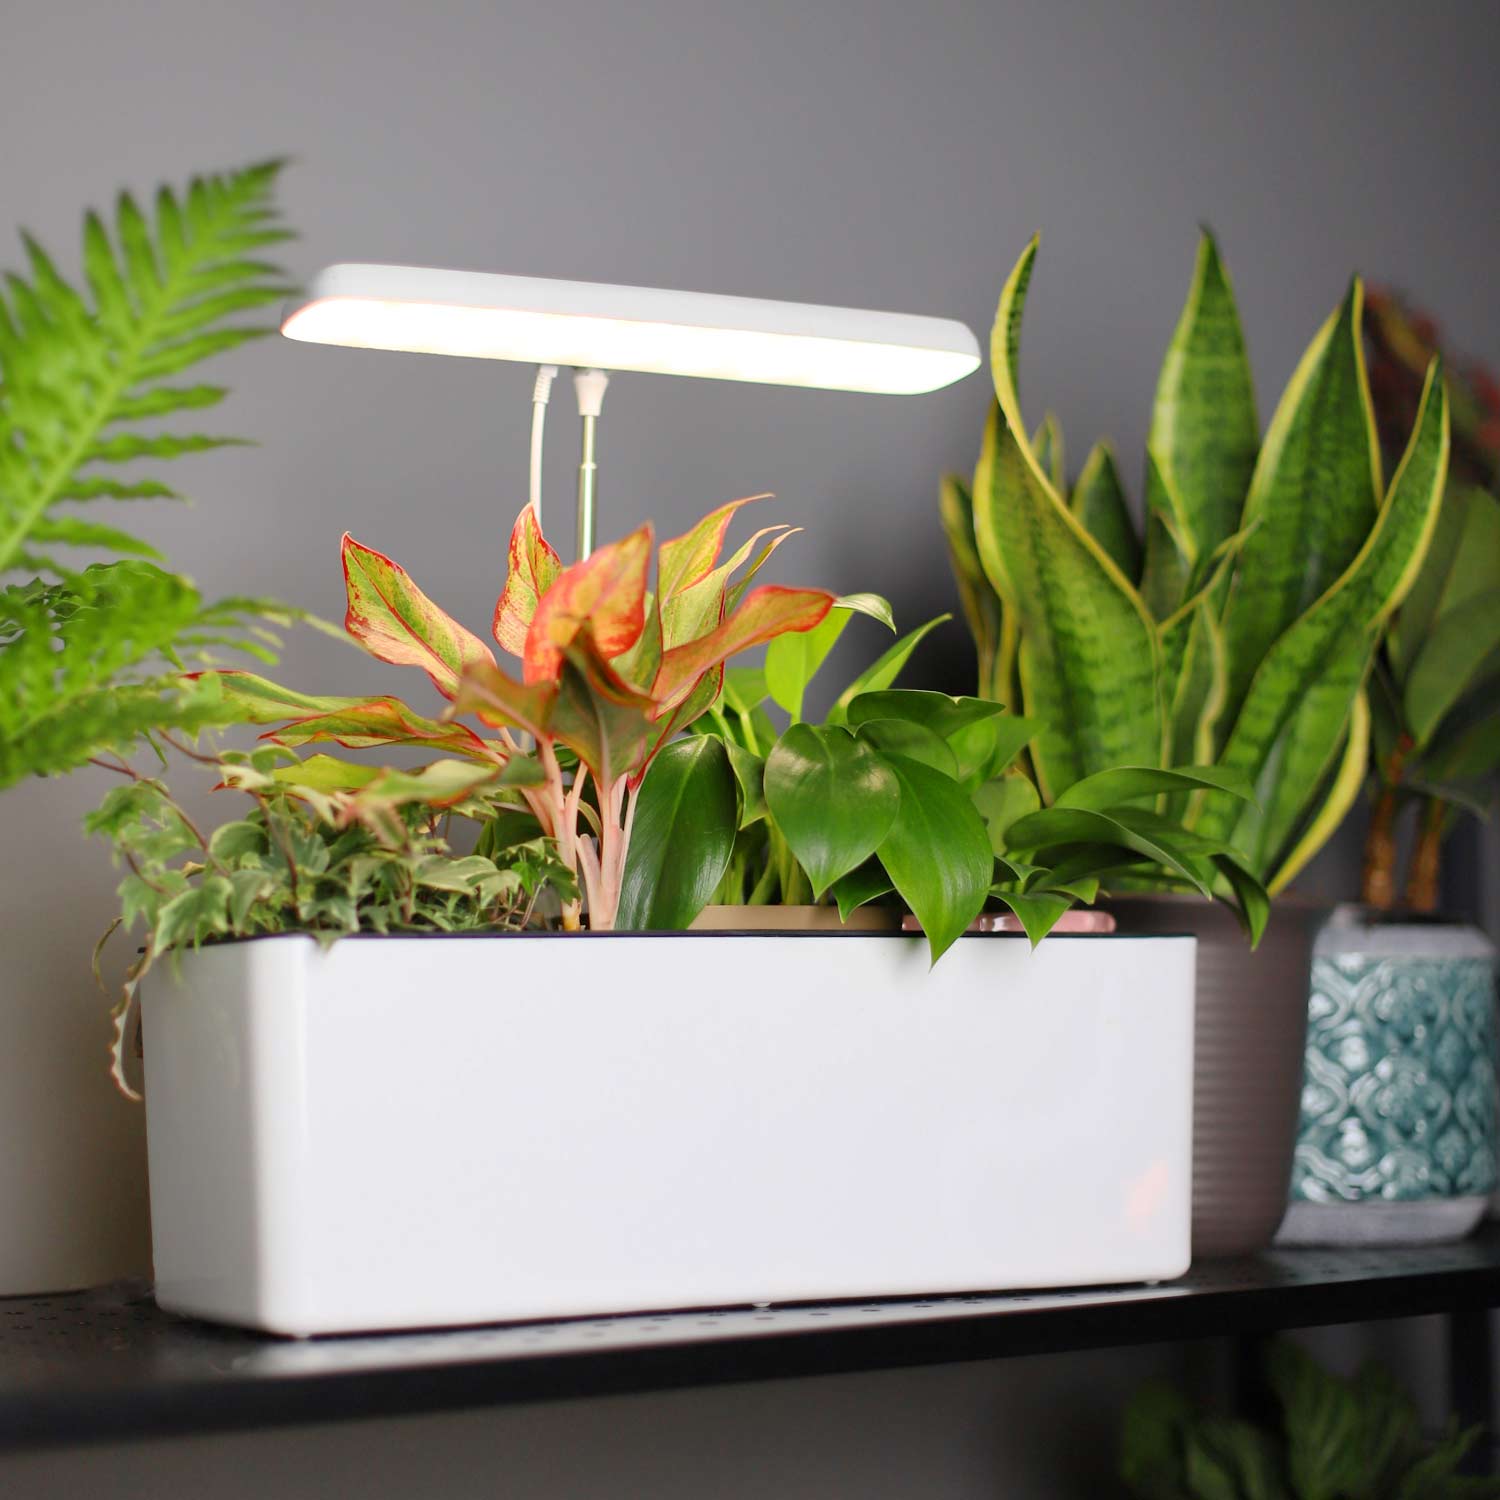 TG304 decorative grow lamp light for house plants indirect light plants